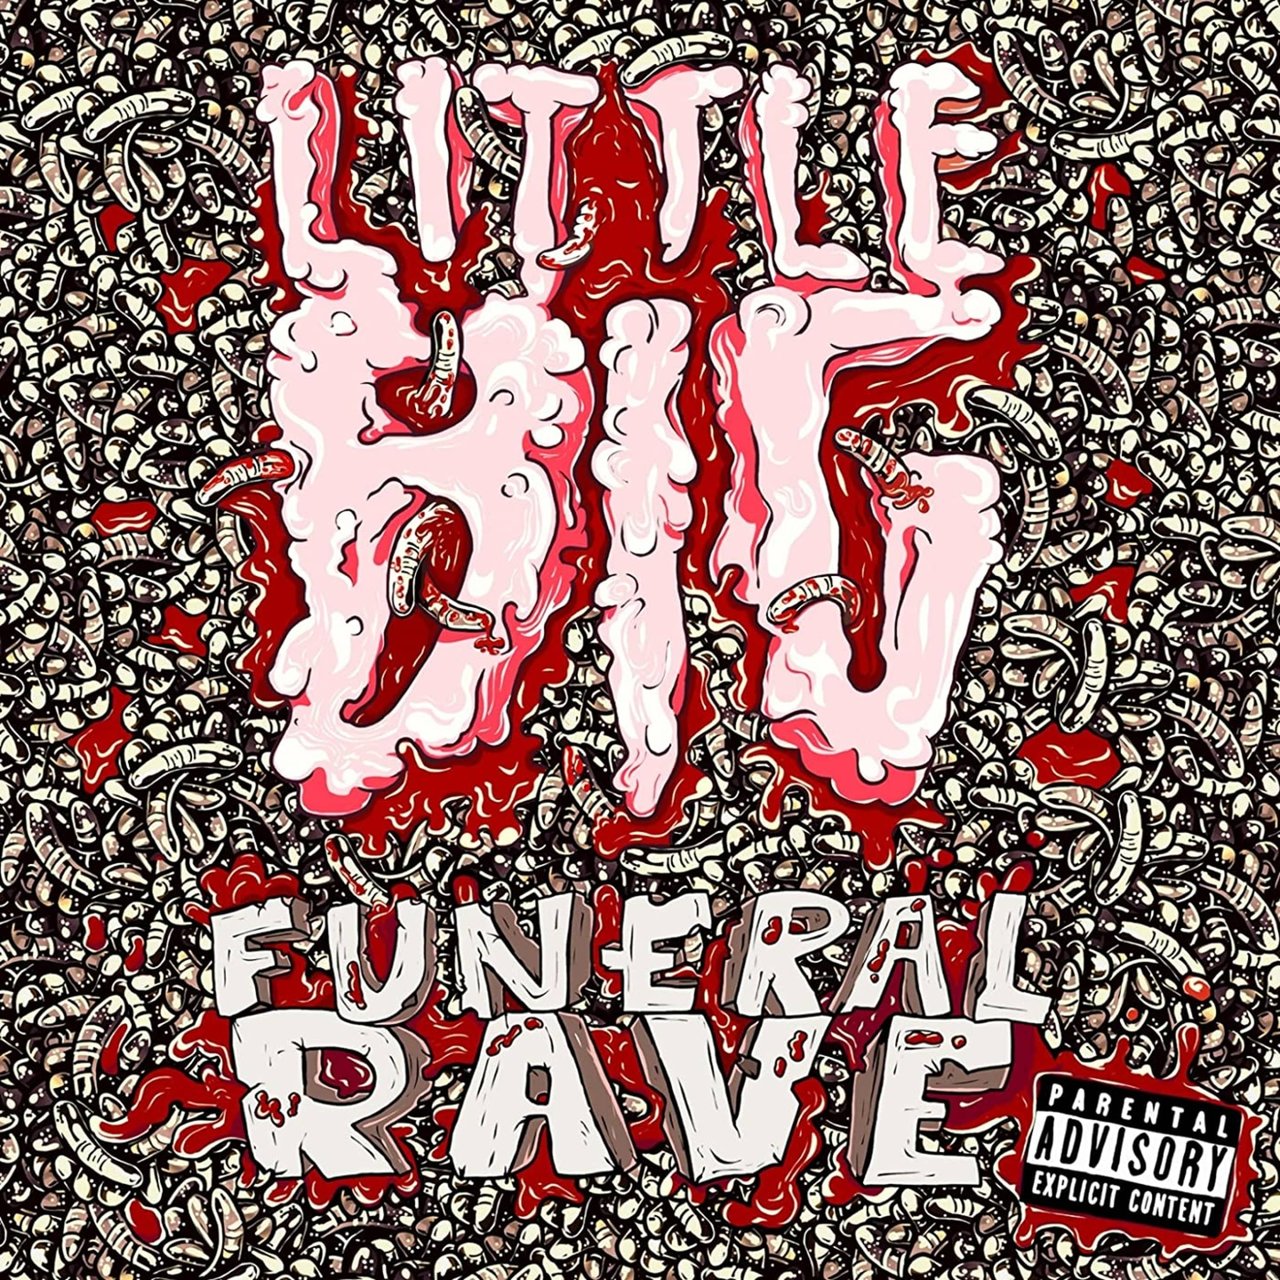 Little Big featuring Danny Zuckerman — Hateful Love cover artwork